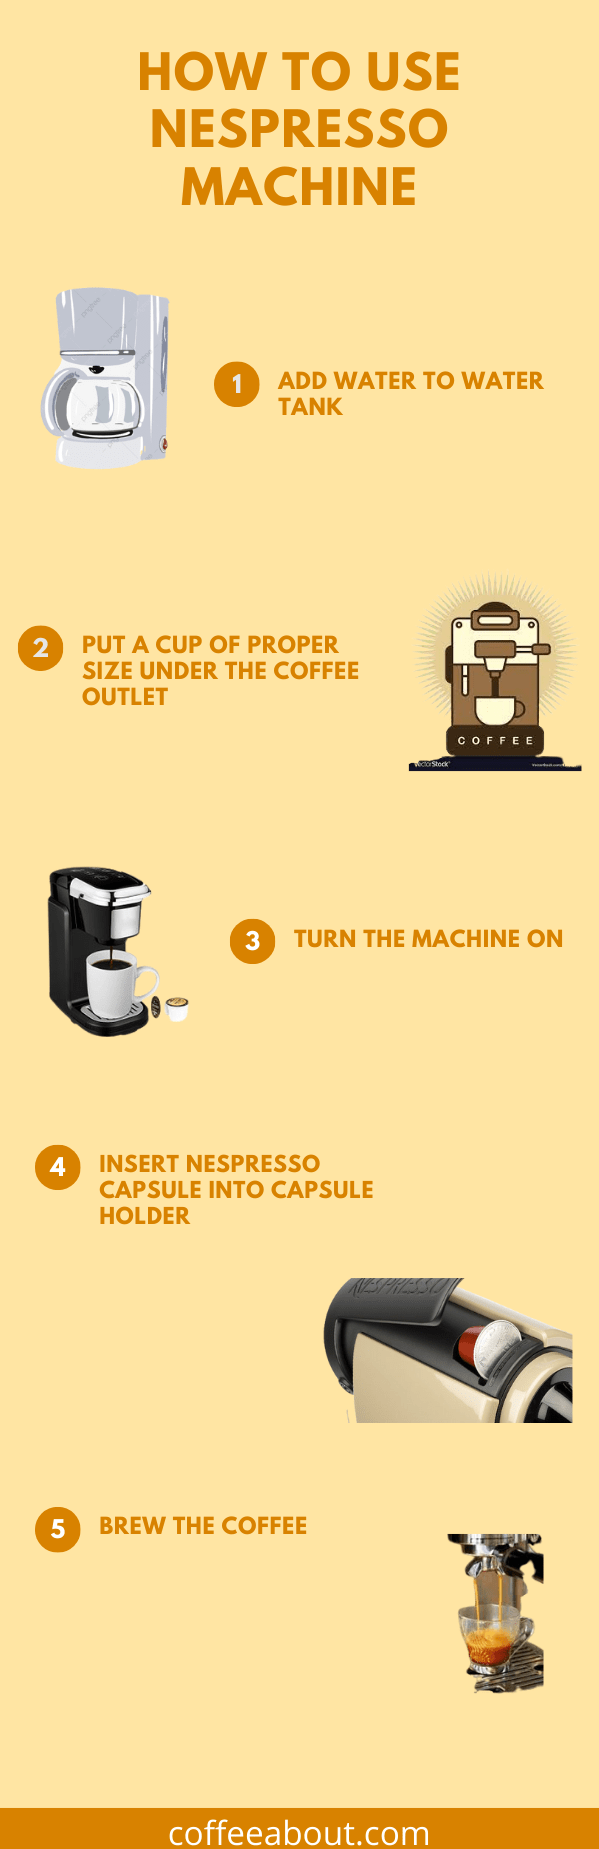 How to use Nespresso machine